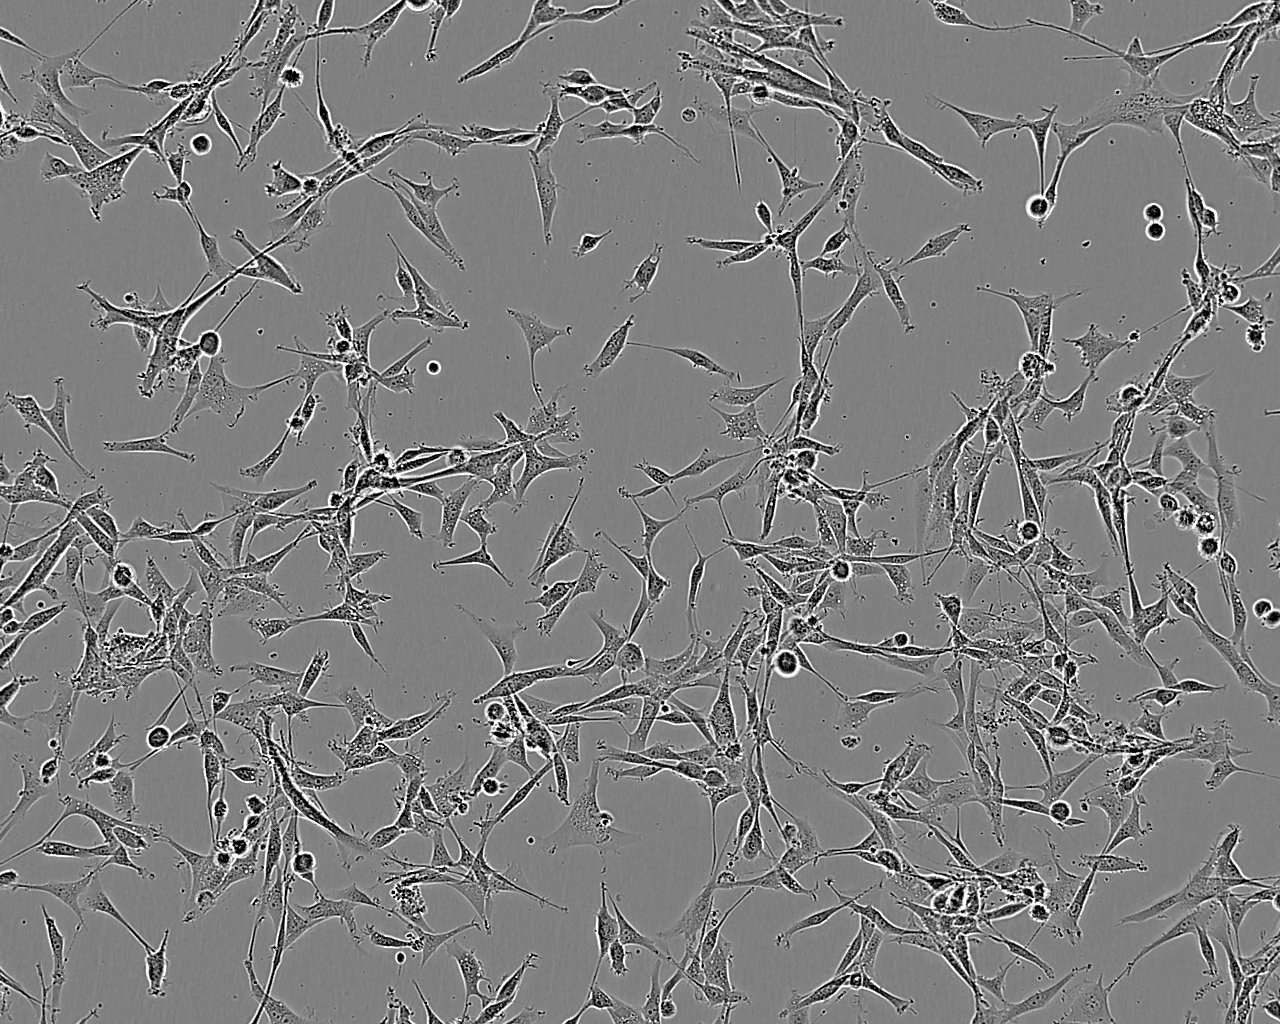 HNE-1 epithelioid cells人鼻咽癌细胞系,HNE-1 epithelioid cells